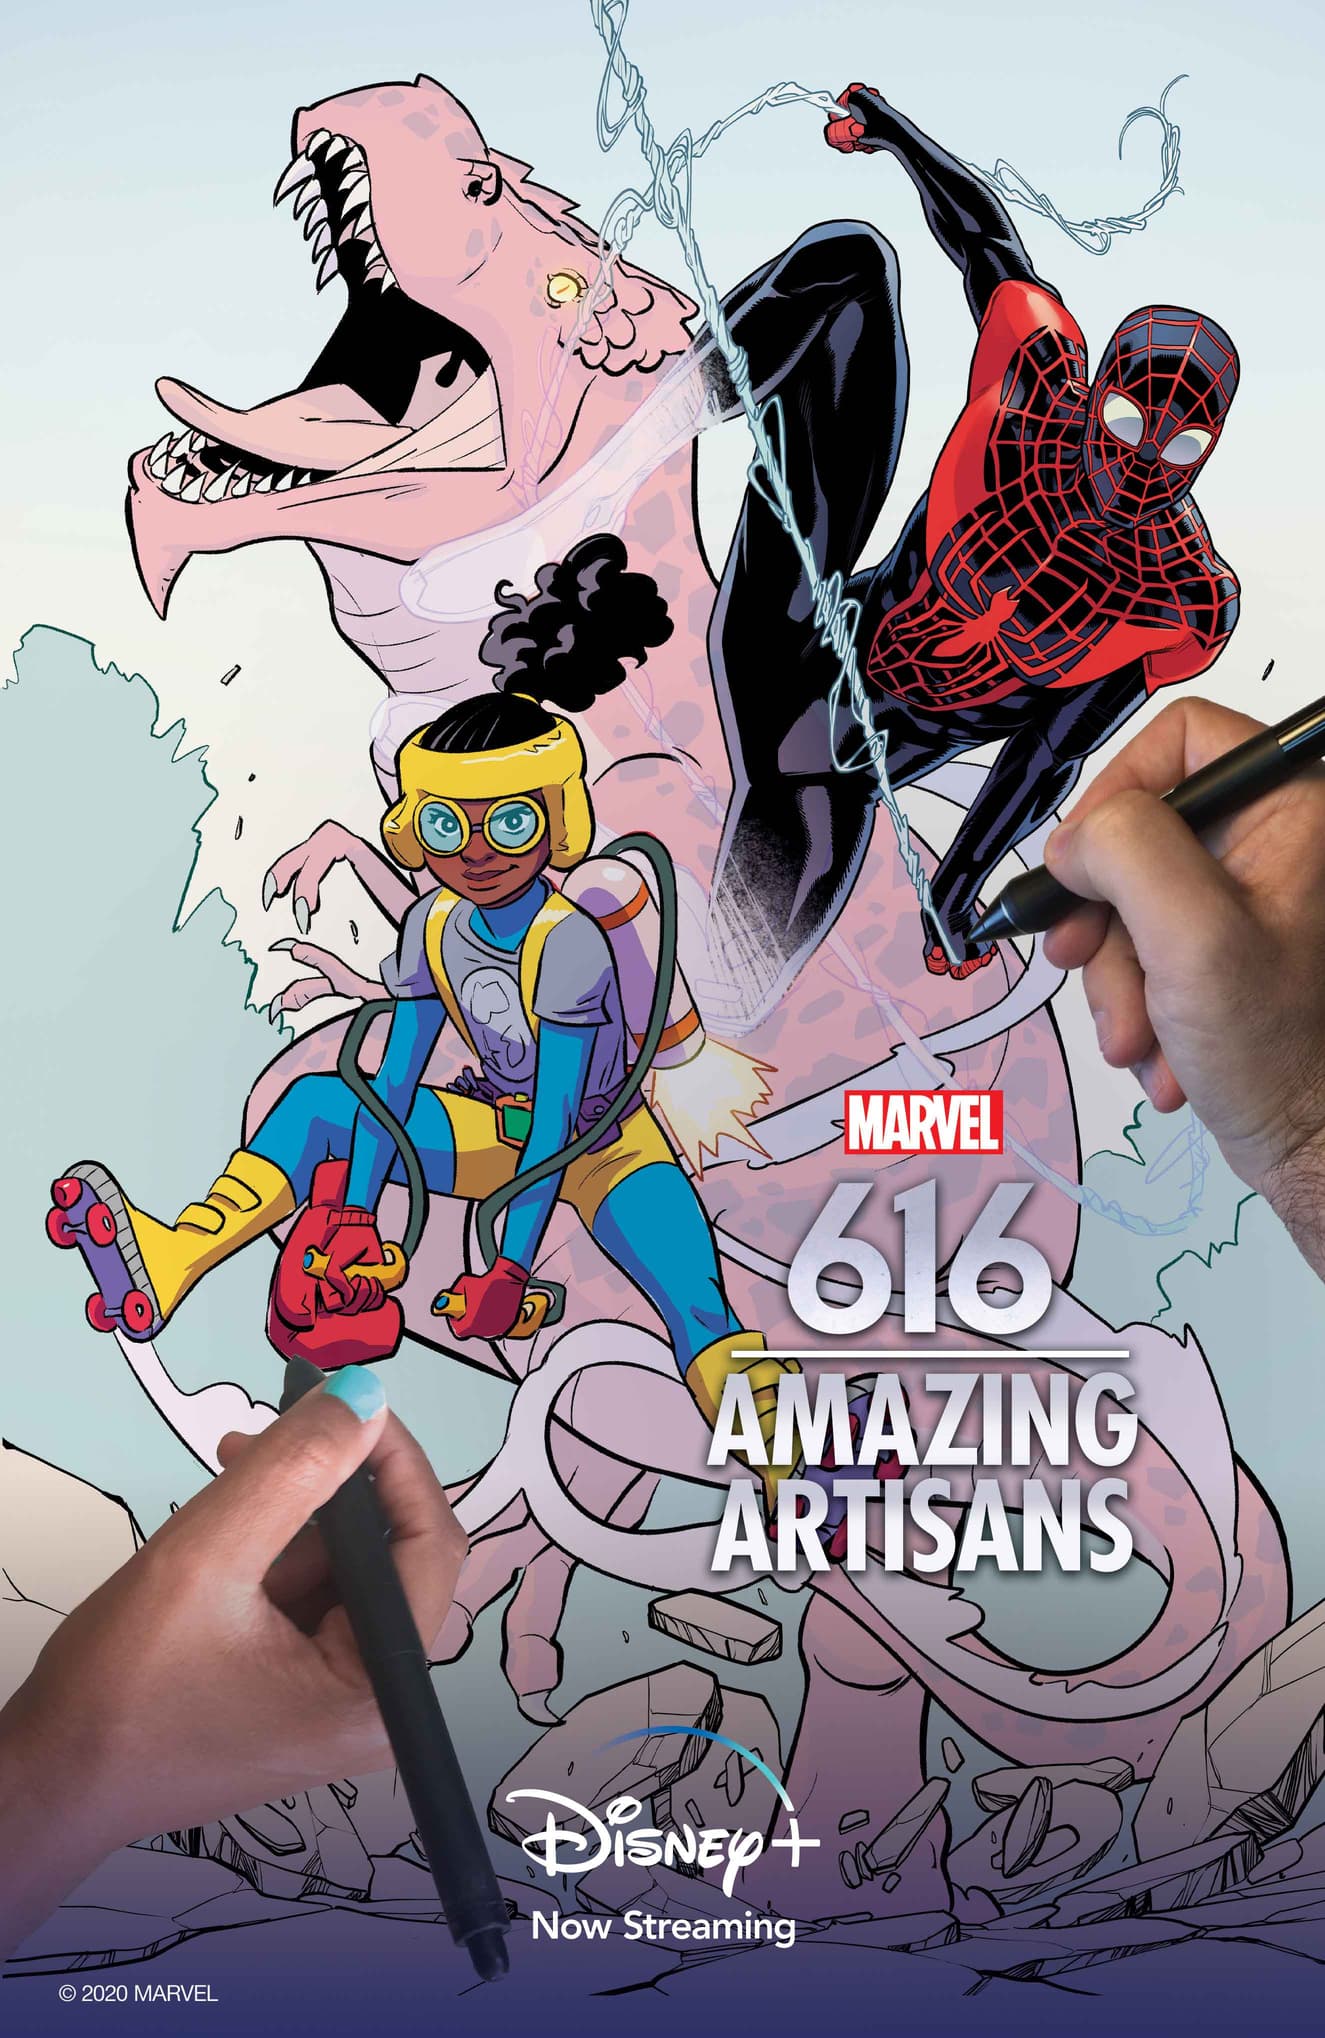 Marvel's 616 Amazing Artisans